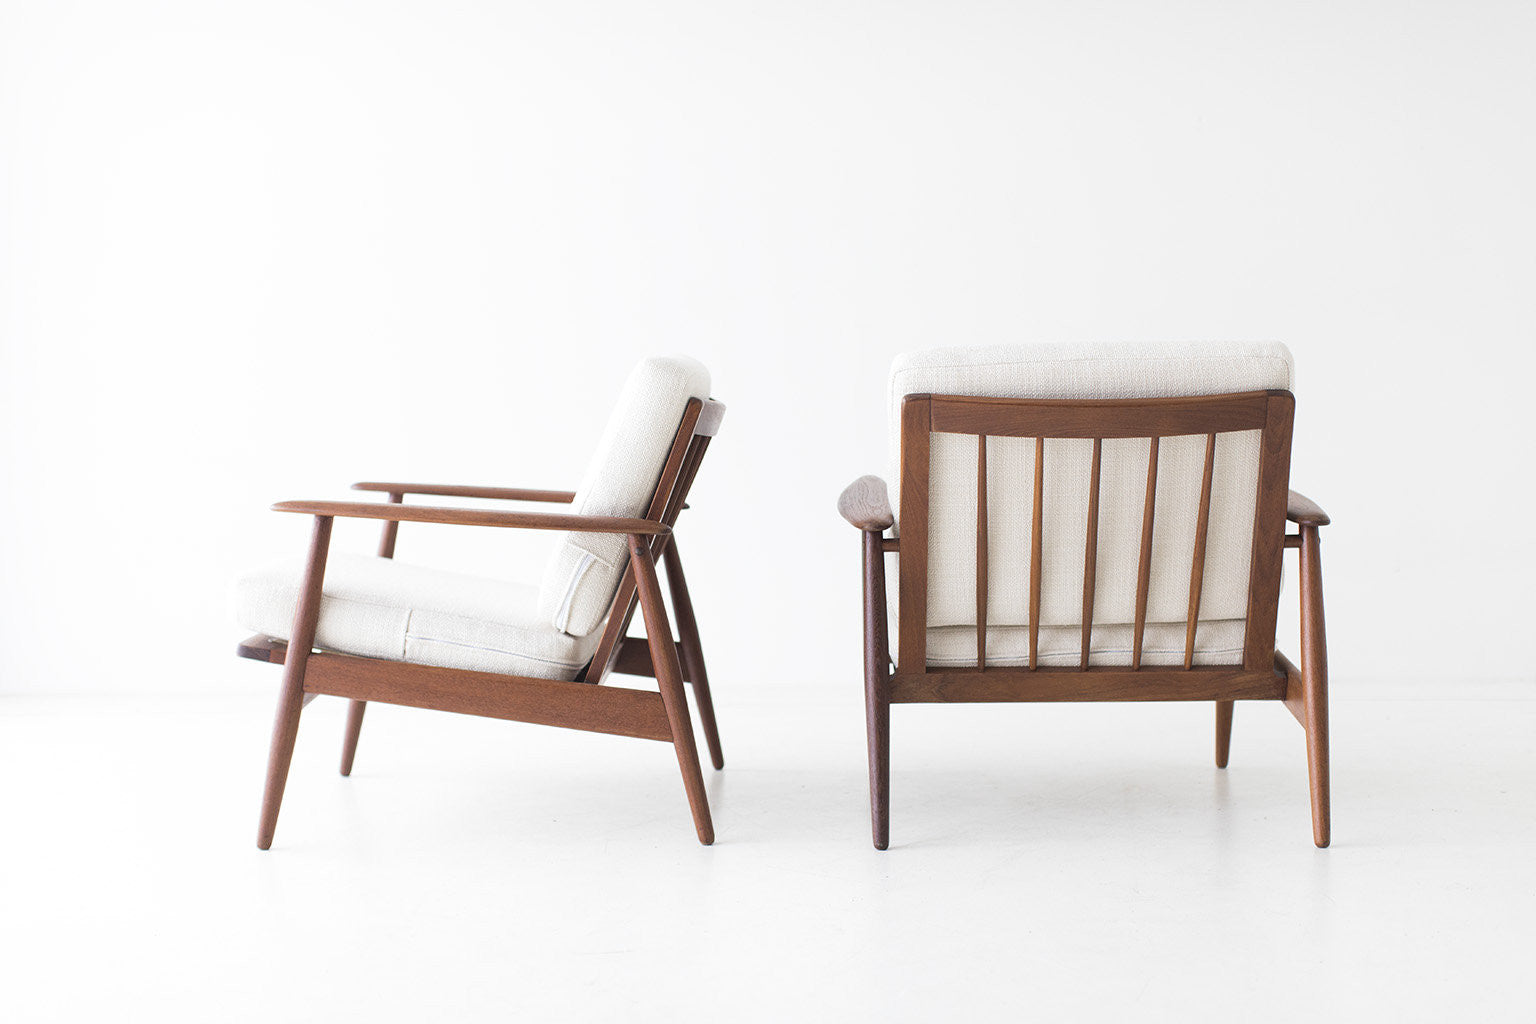 Danish Teak Lounge Chairs for Moreddi - 01031701